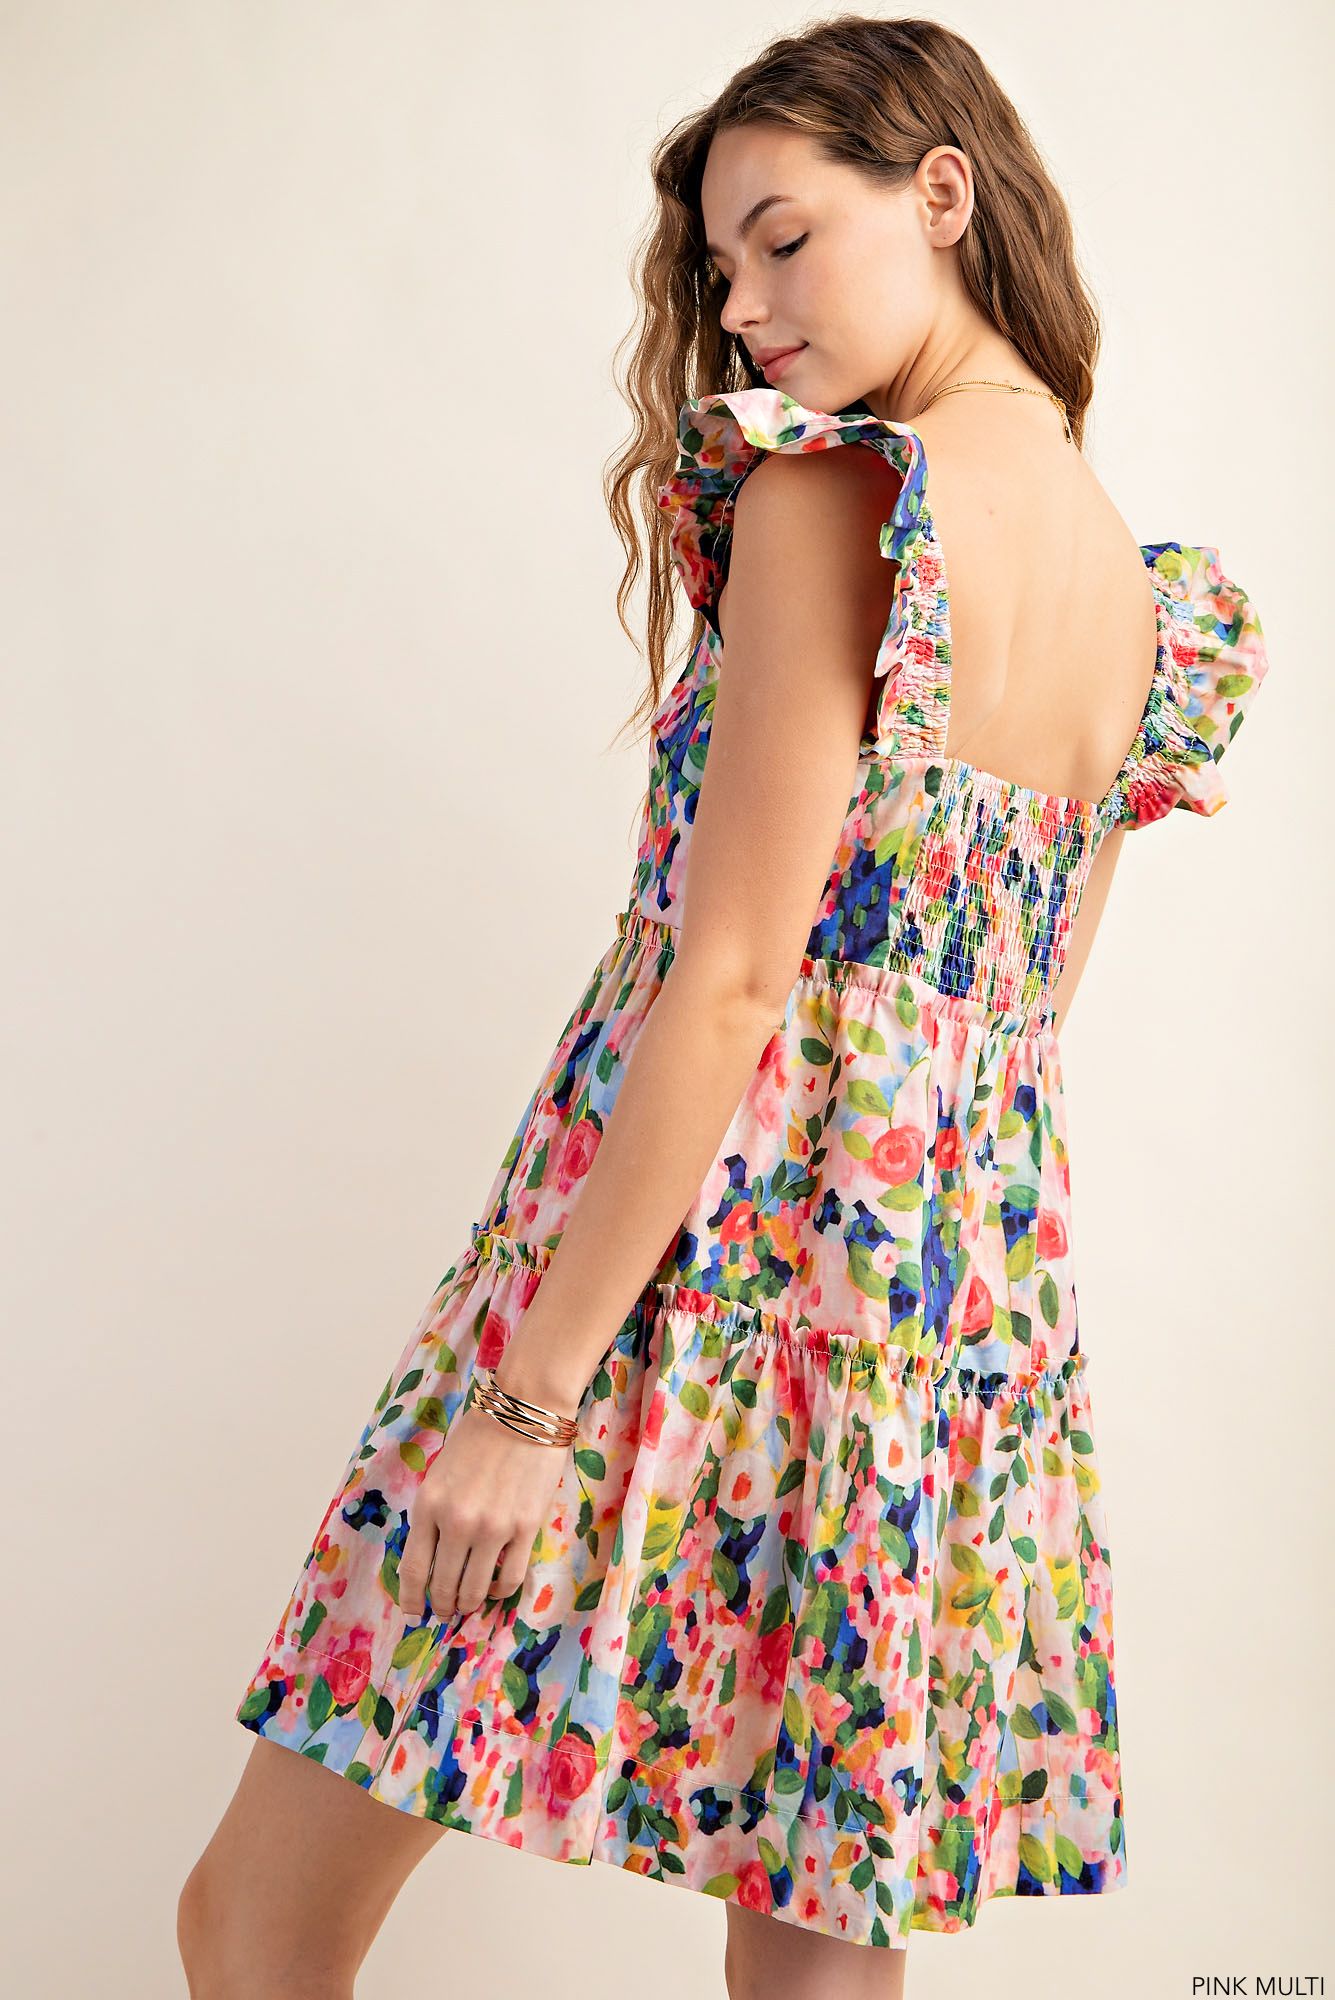 Watercolor Floral Dress